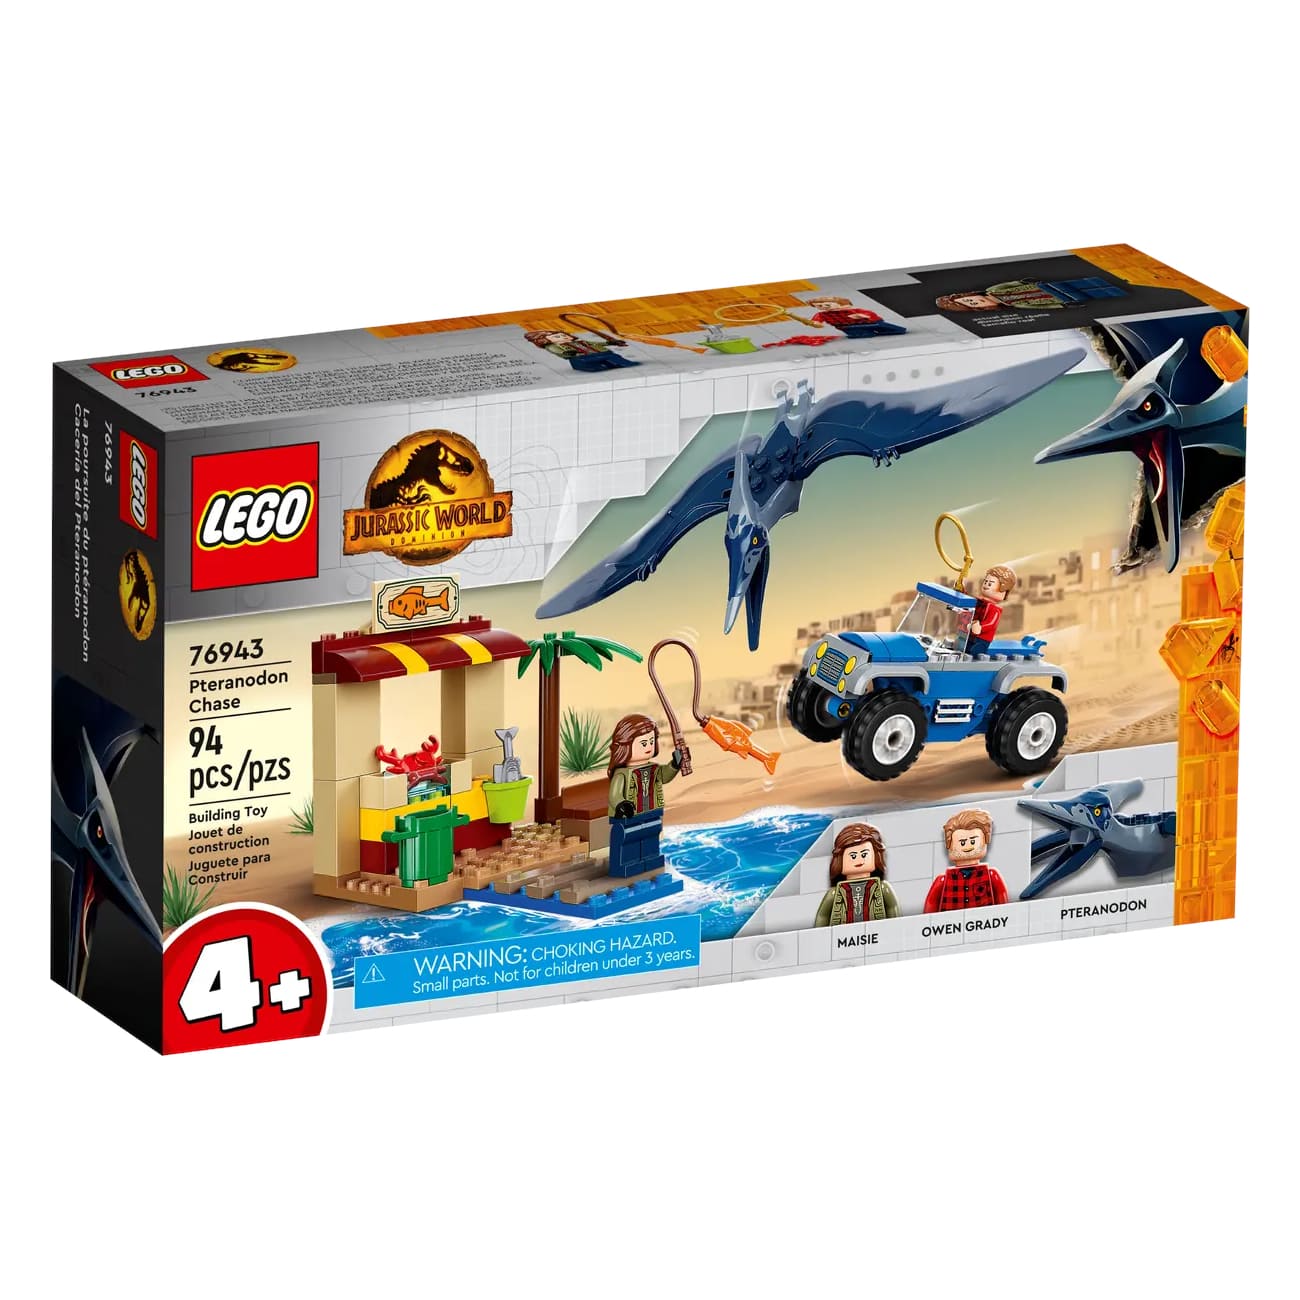 Конструктор LEGO Jurassic World Pteranodon Chase 76943, 94 детали конструктор lego jurassic world погоня за птеранодоном 76943